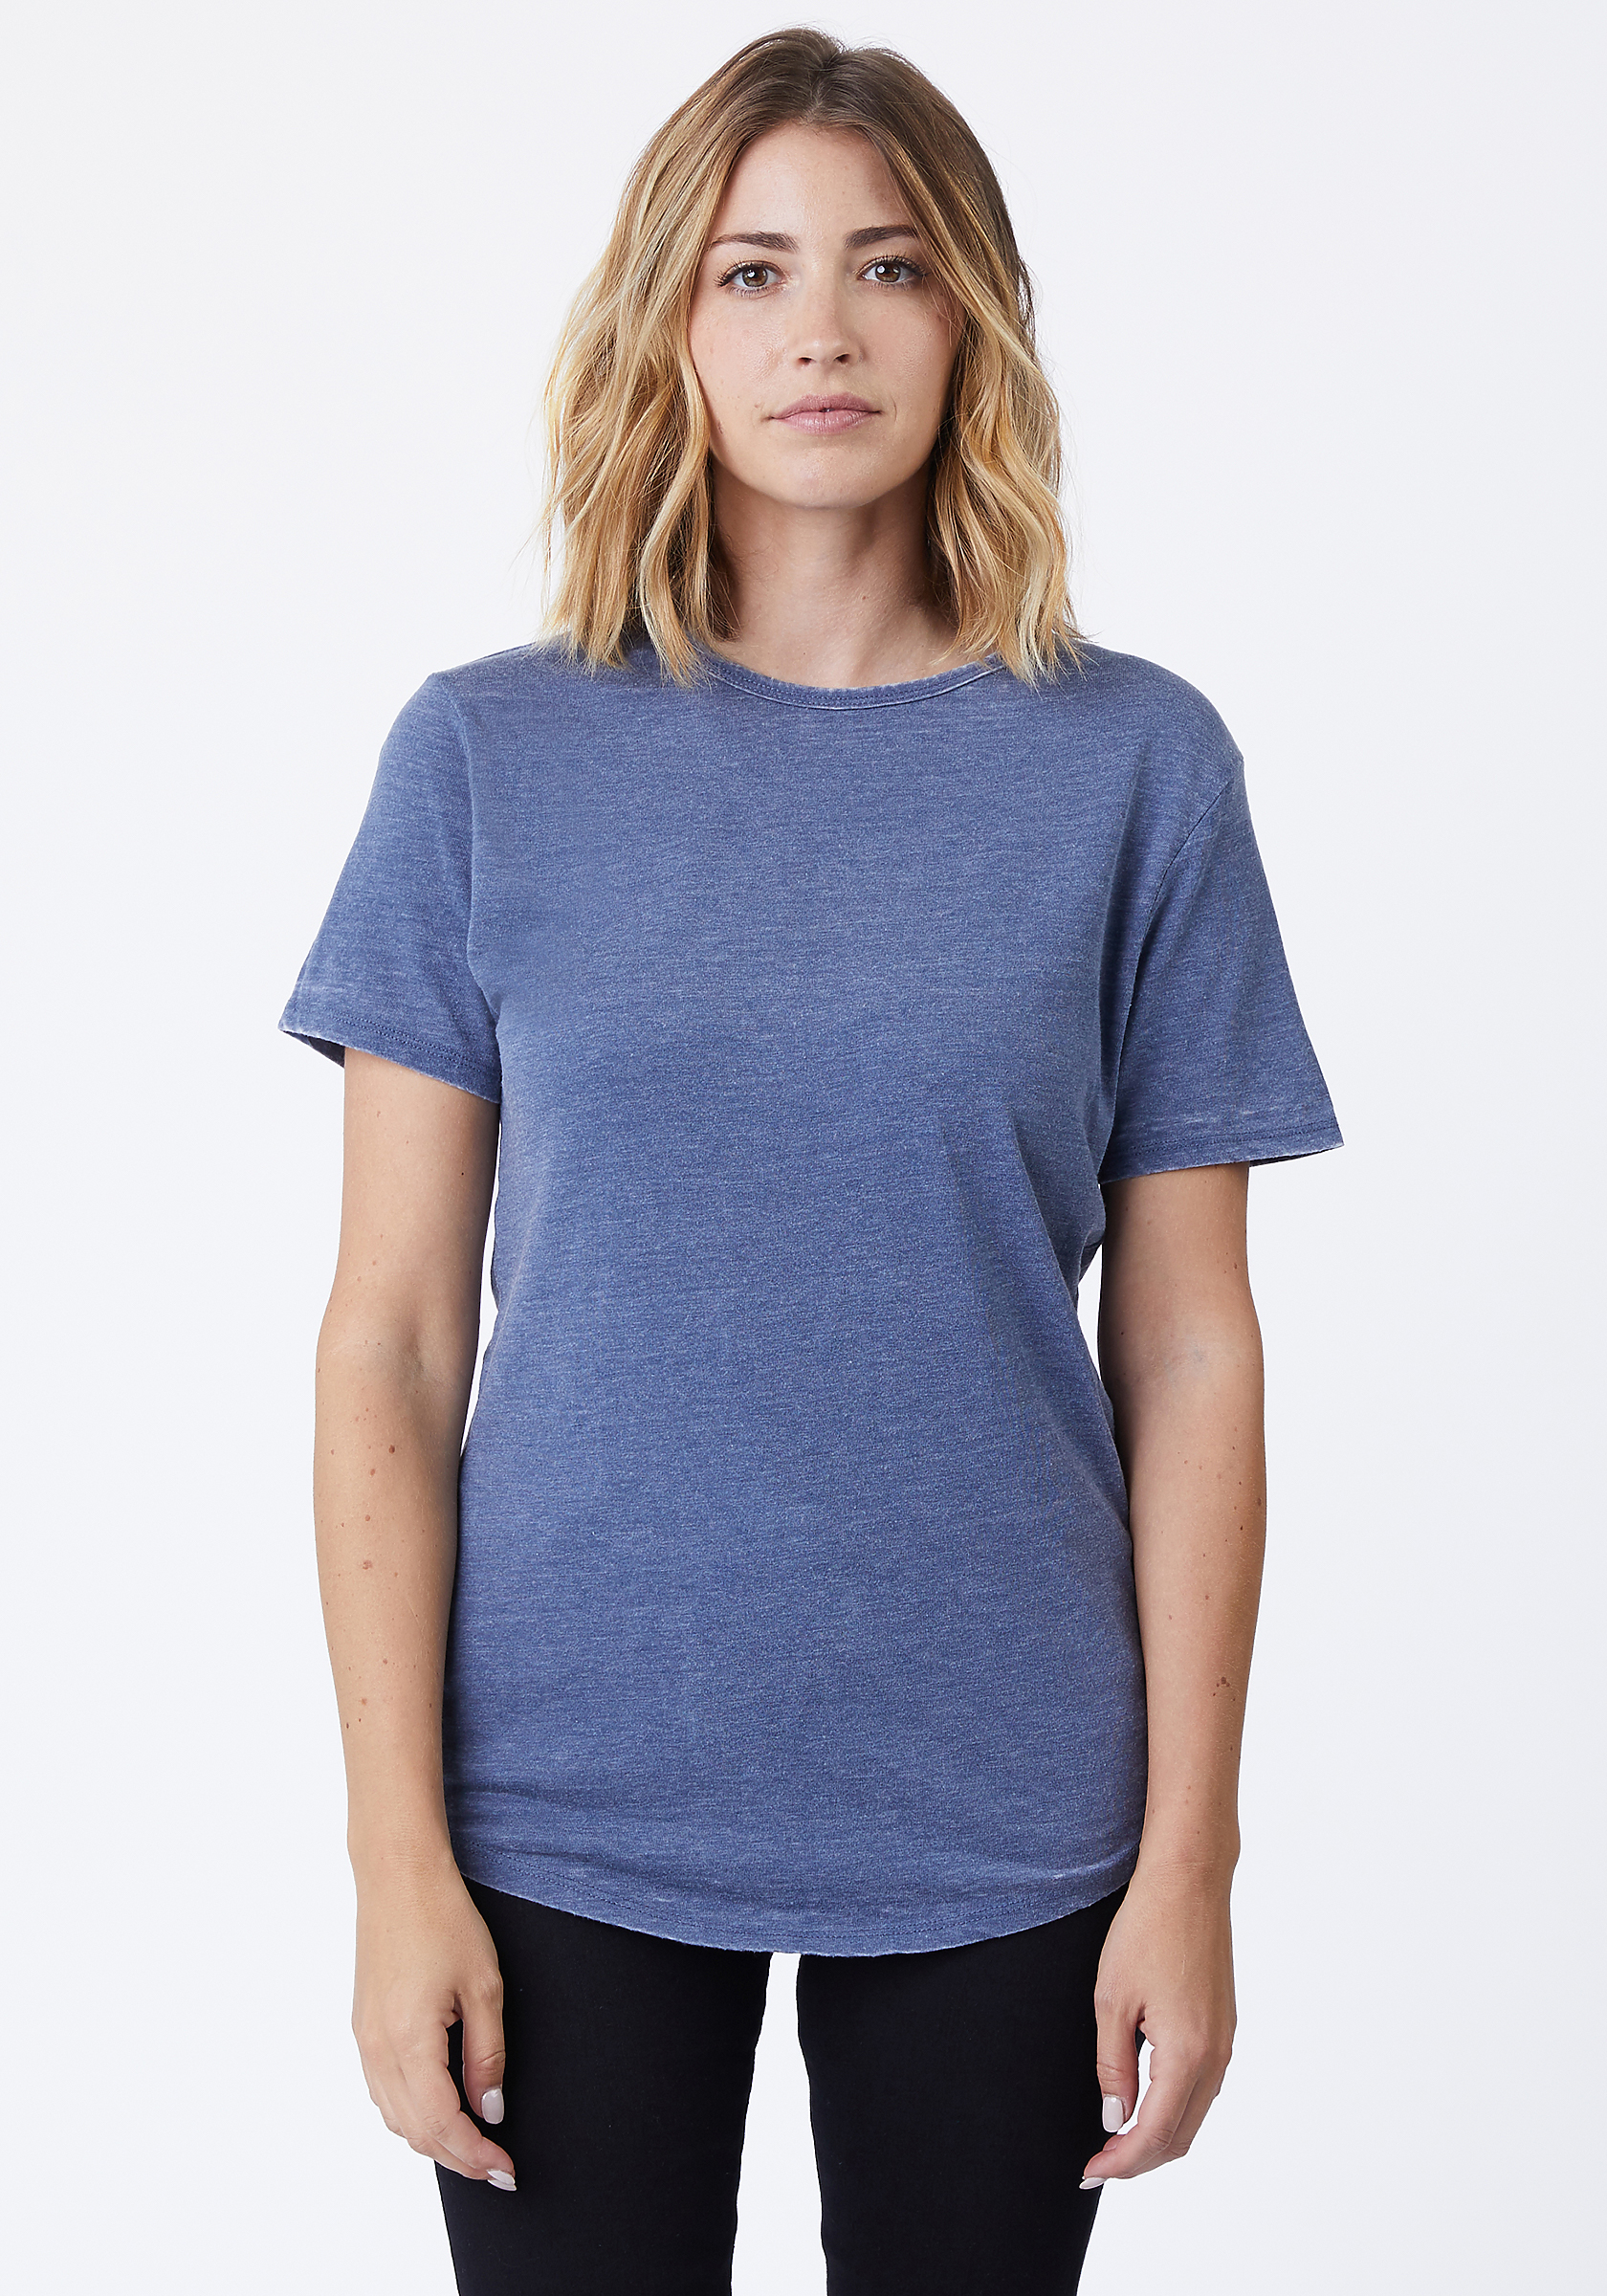 Women's Burnout T-Shirt